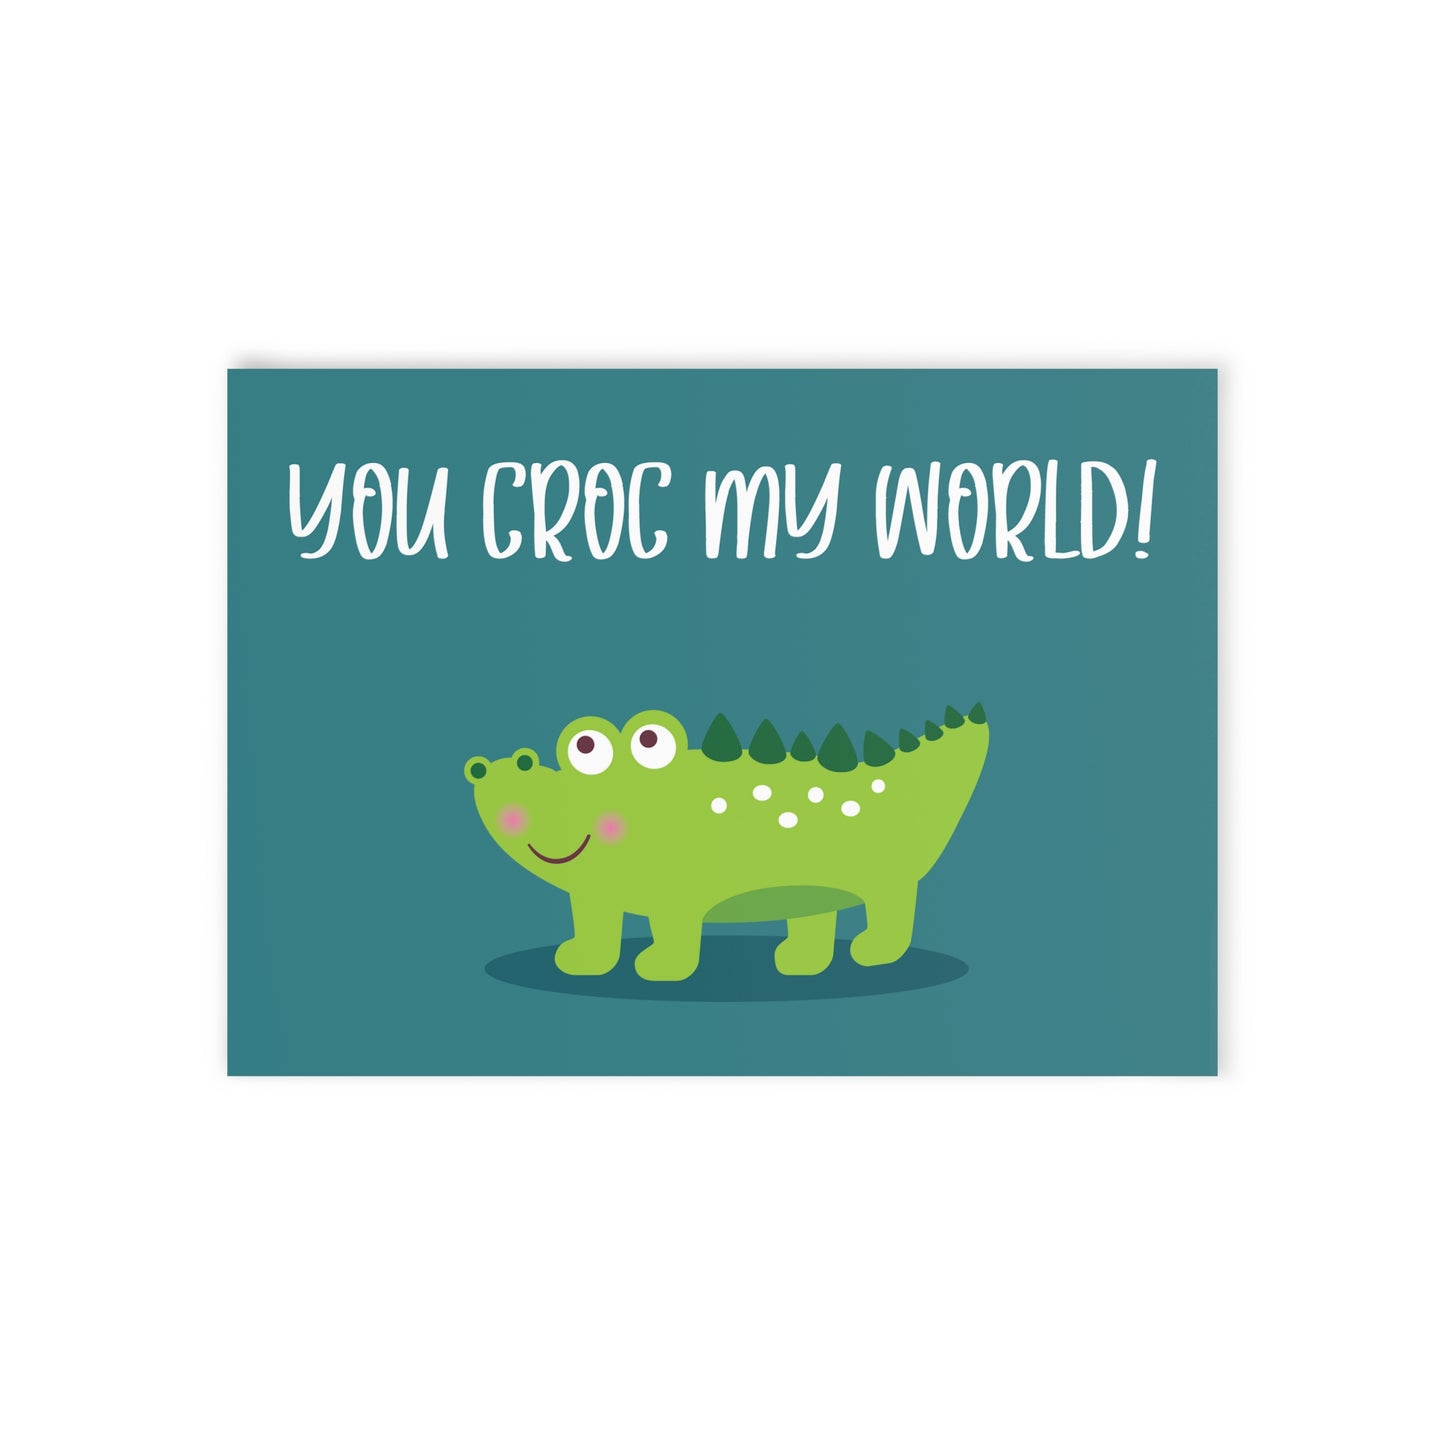 You Croc My World